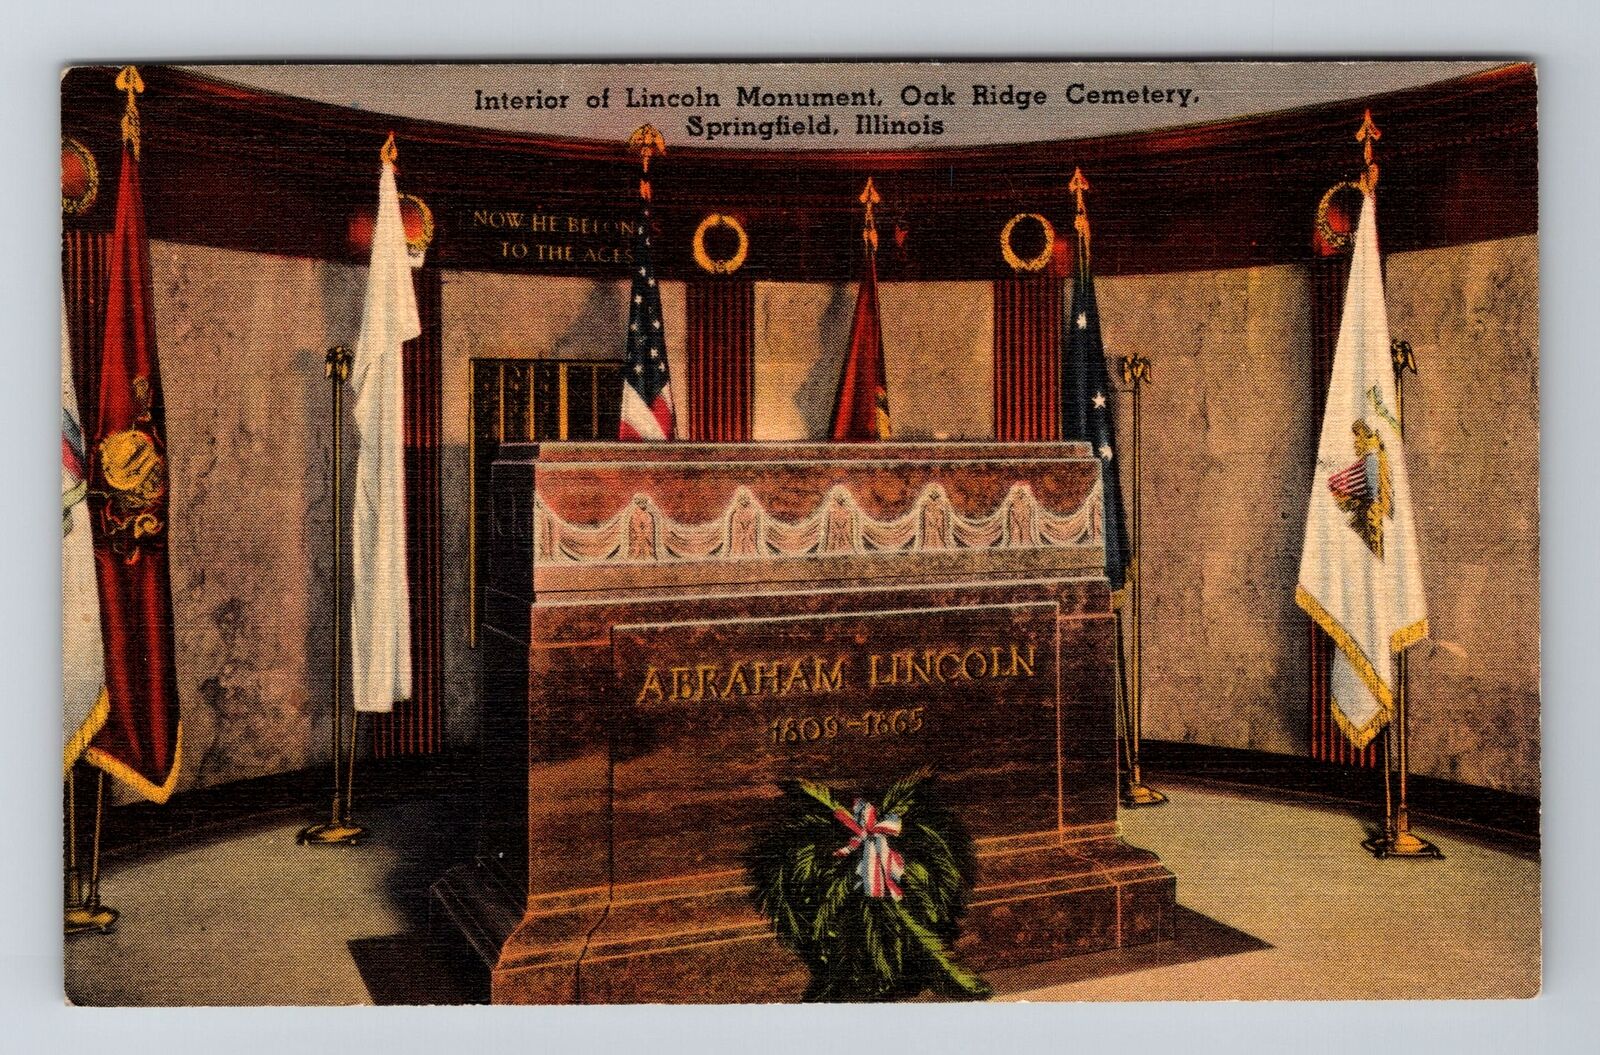 Springfield Il-Illinois, Interior Lincoln Monument, Antique Vintage Postcard